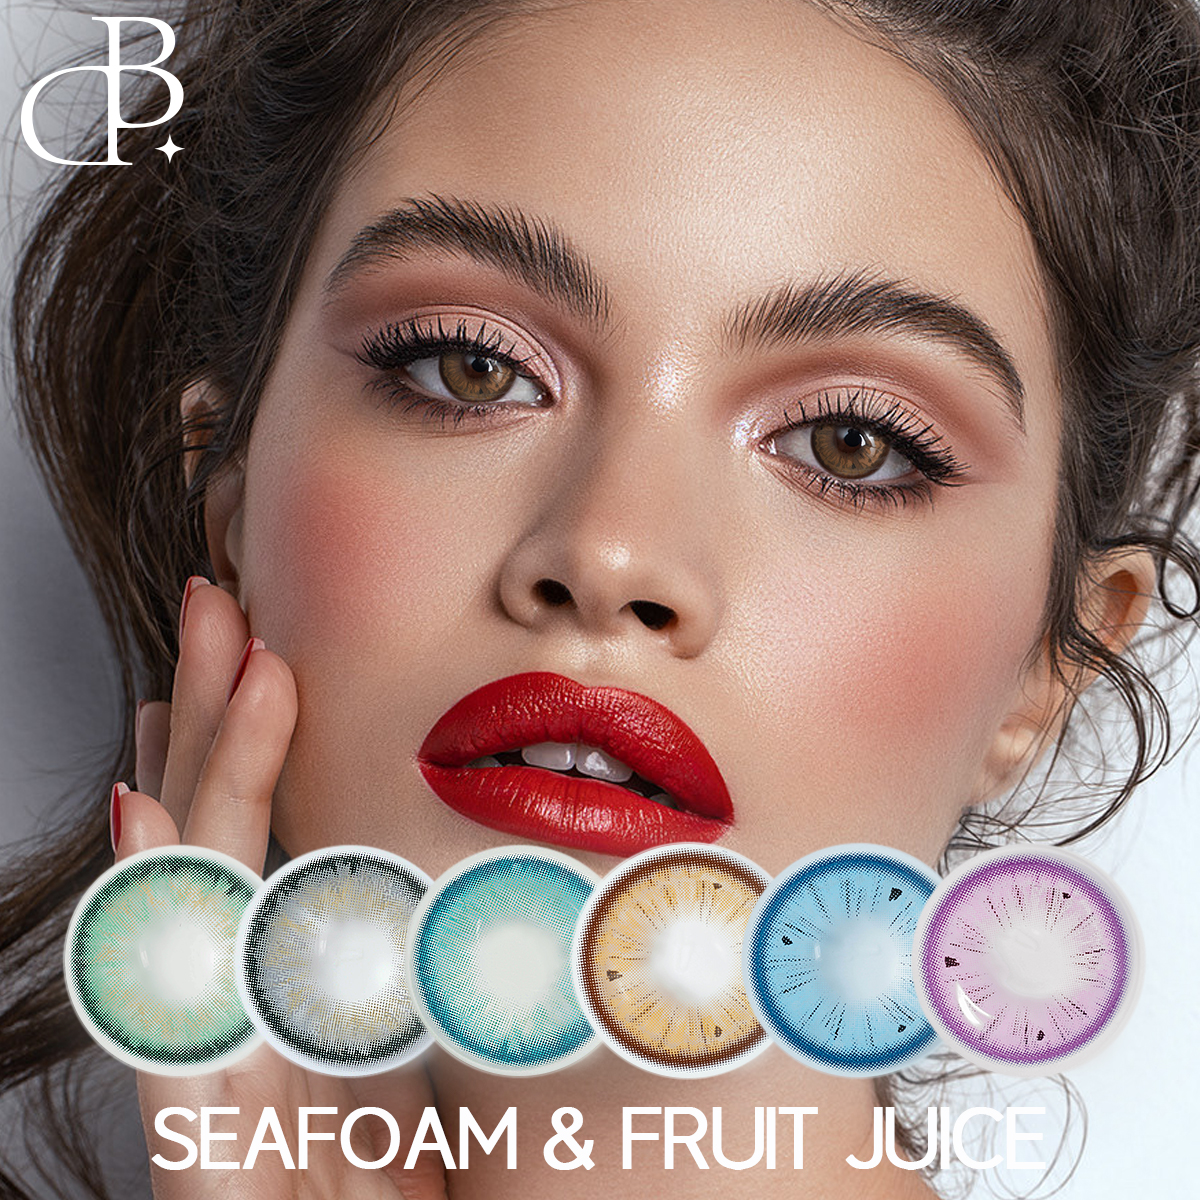 https://www.dblenses.com/seafoamfruit-juice-oemodm-contacto-new-style-प्राकृतिक-आंखें-रंगीन-लेंस-कॉस्मेटिक-आंखें-लेंस-रंग-संपर्क-लेंस-उत्पाद/